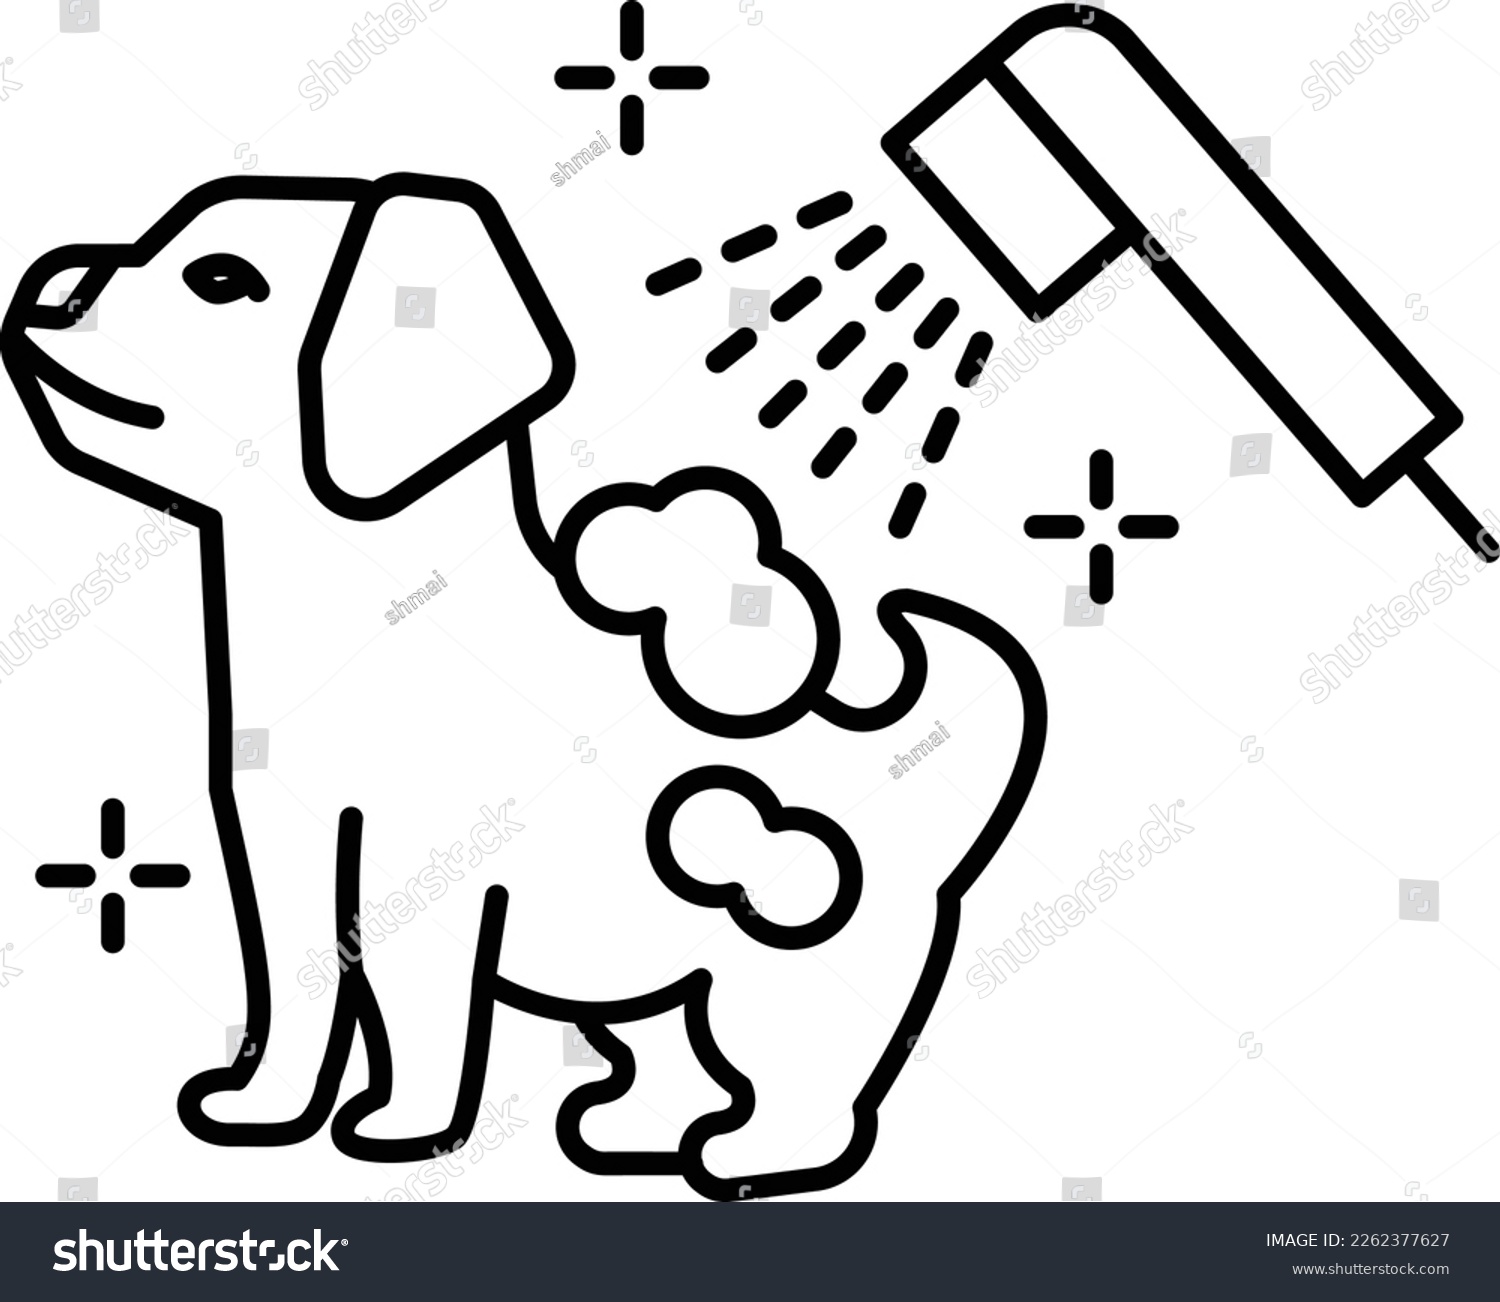 SVG of four-legged friends Spa Services vector outline icon design, Pet and Vet symbol, Animal Shelter sign, critter stock illustration, domestic dog wash station concept svg